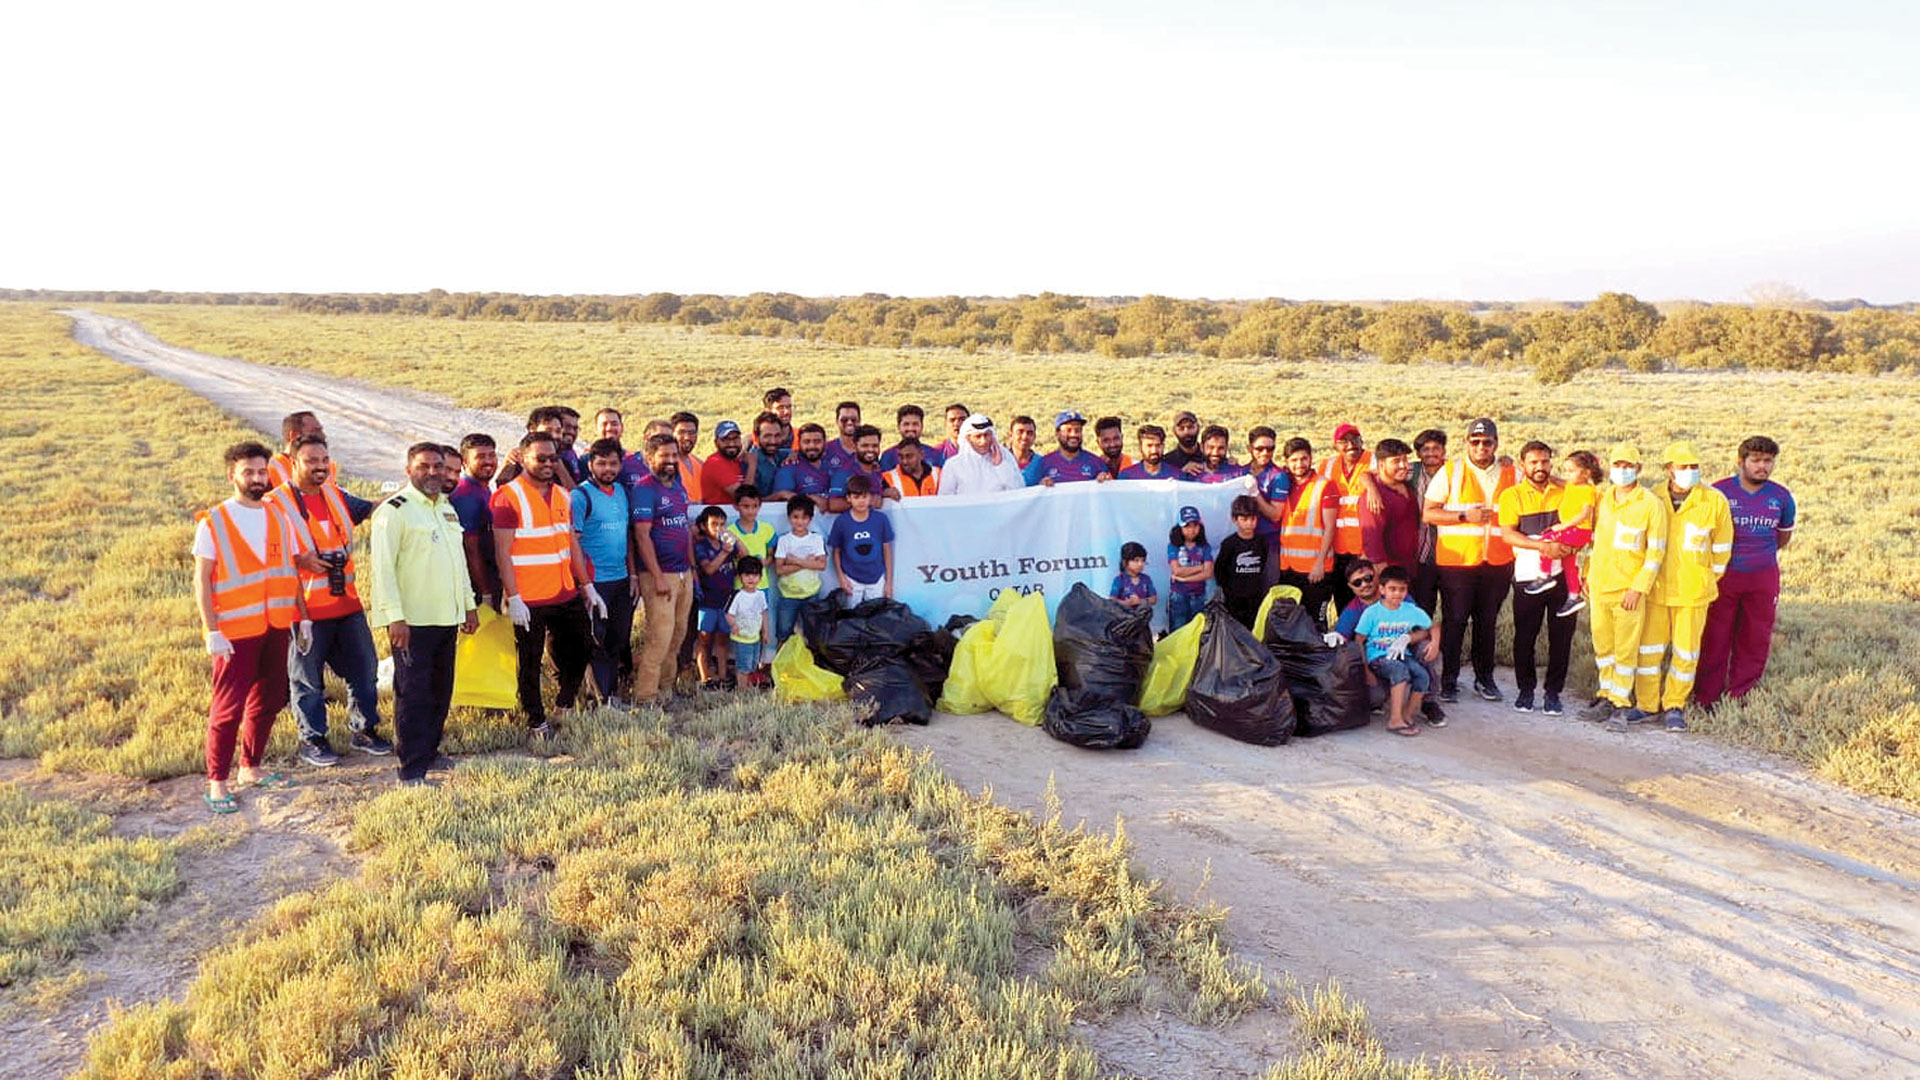 Campaigns to clean Qatari beaches to mark world environment day